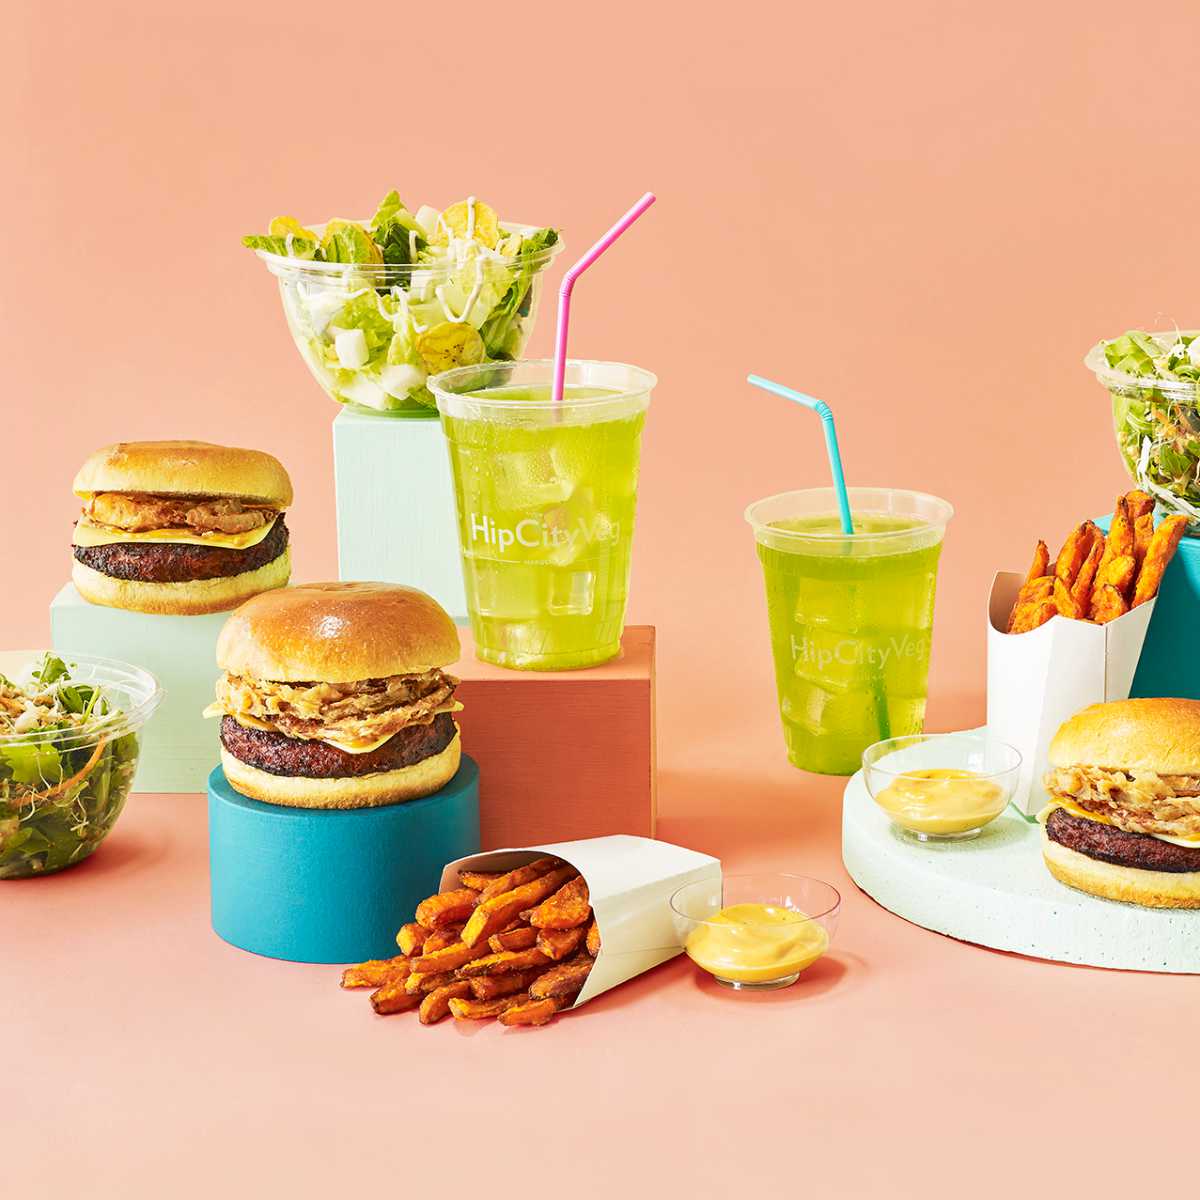 several vegan burgers, salads, fries, and beverages